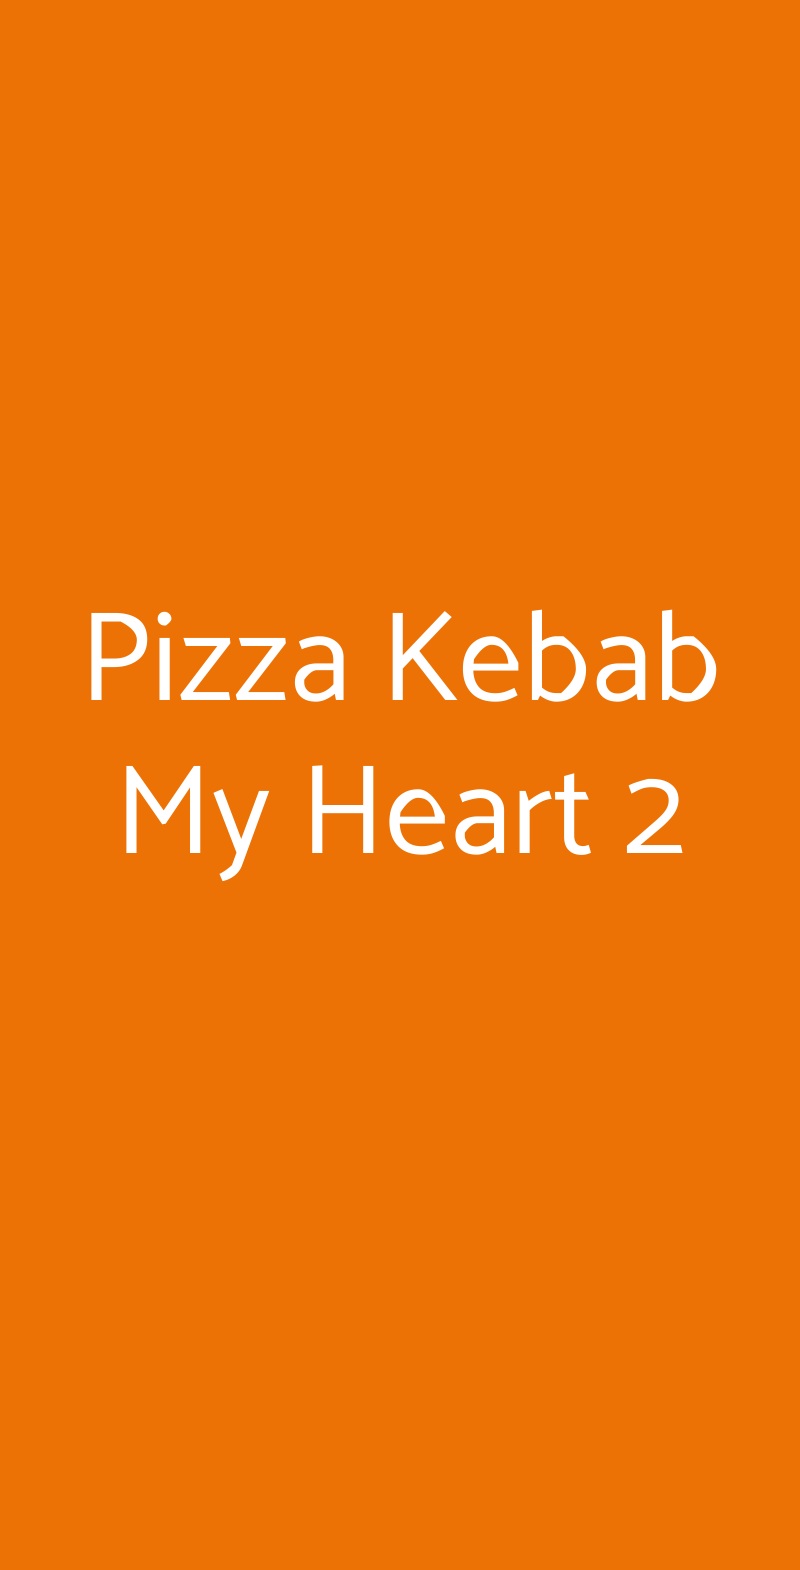 Pizza Kebab My Heart 2 Milano menù 1 pagina